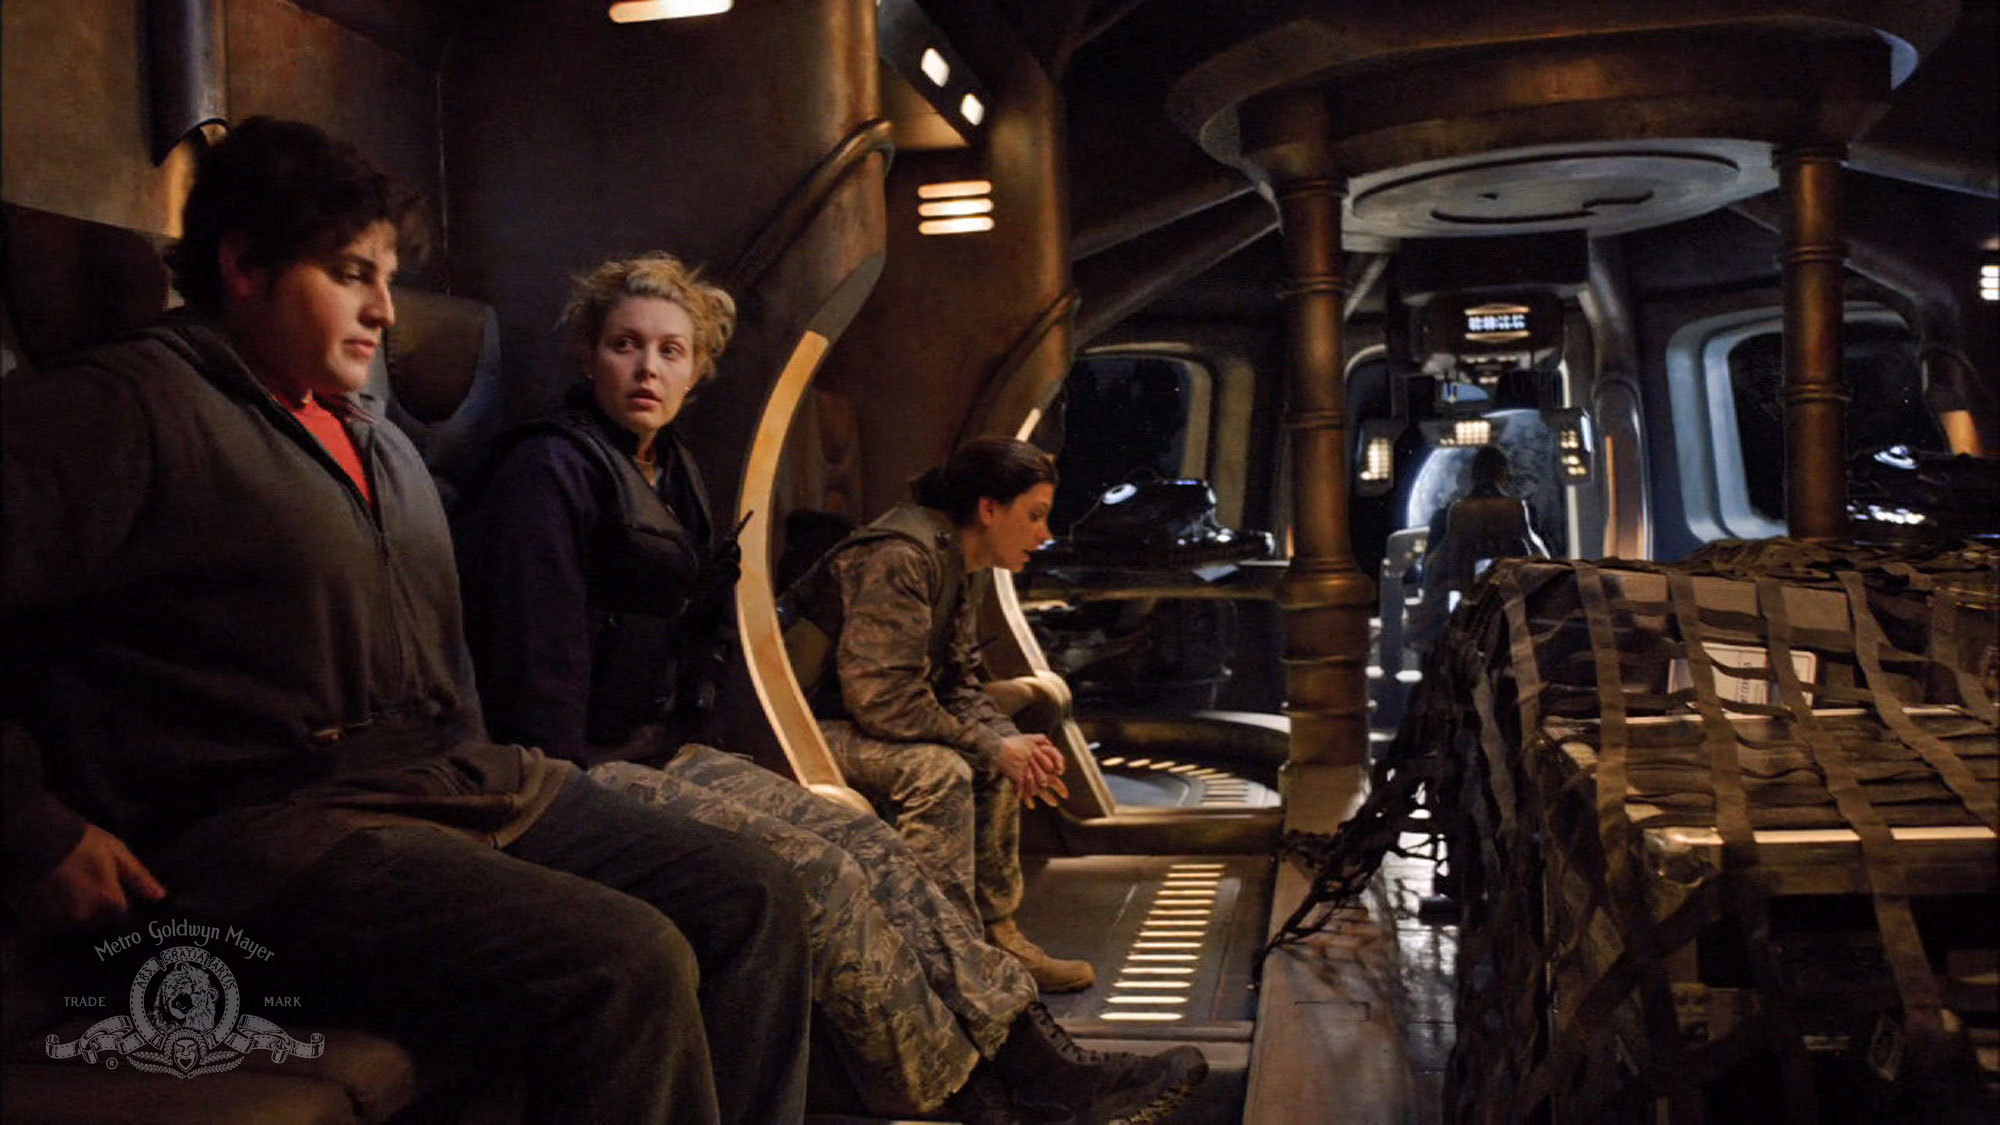 Still of Alaina Huffman, Julia Benson and David Blue in SGU Stargate Universe (2009)